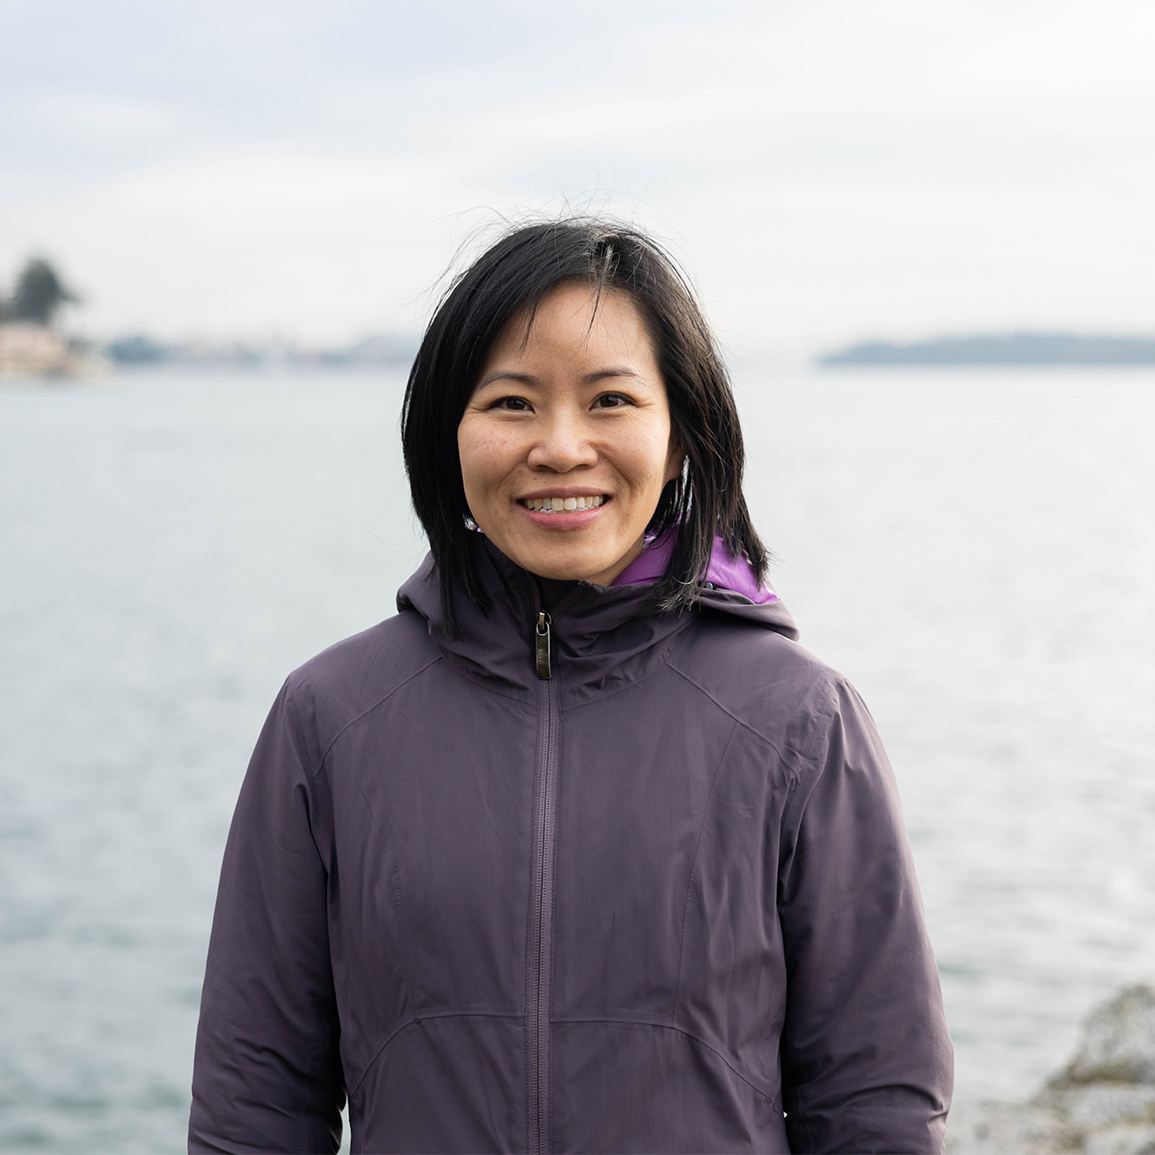 Maureen standing in front of the ocean wearing a purple jacket. 